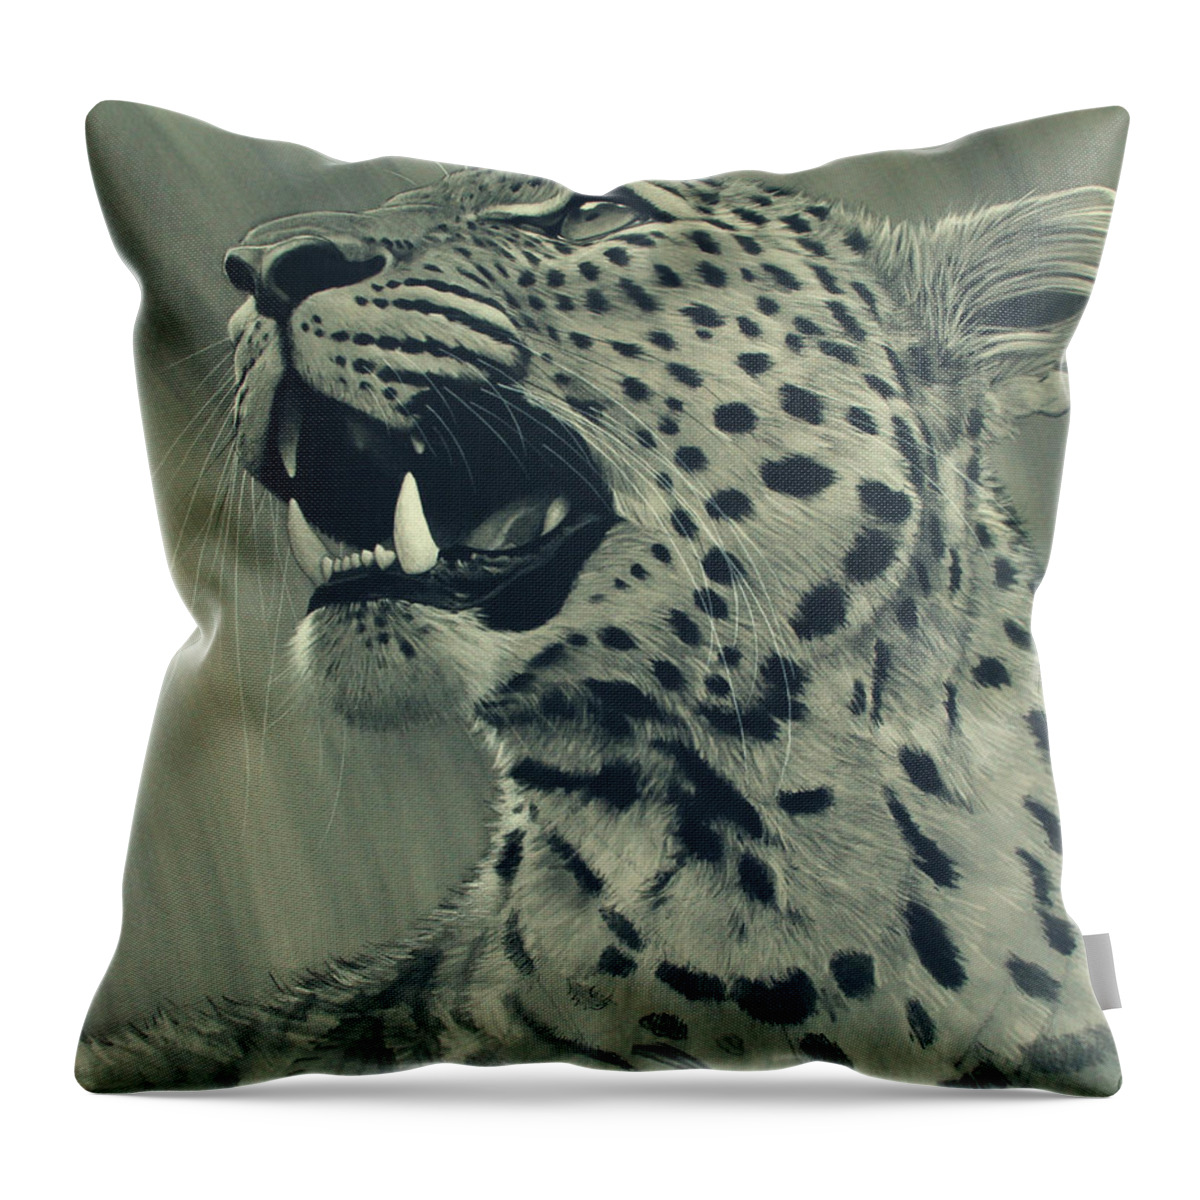 Leopard Throw Pillow featuring the digital art Leopard Portrait #1 by Aaron Blaise